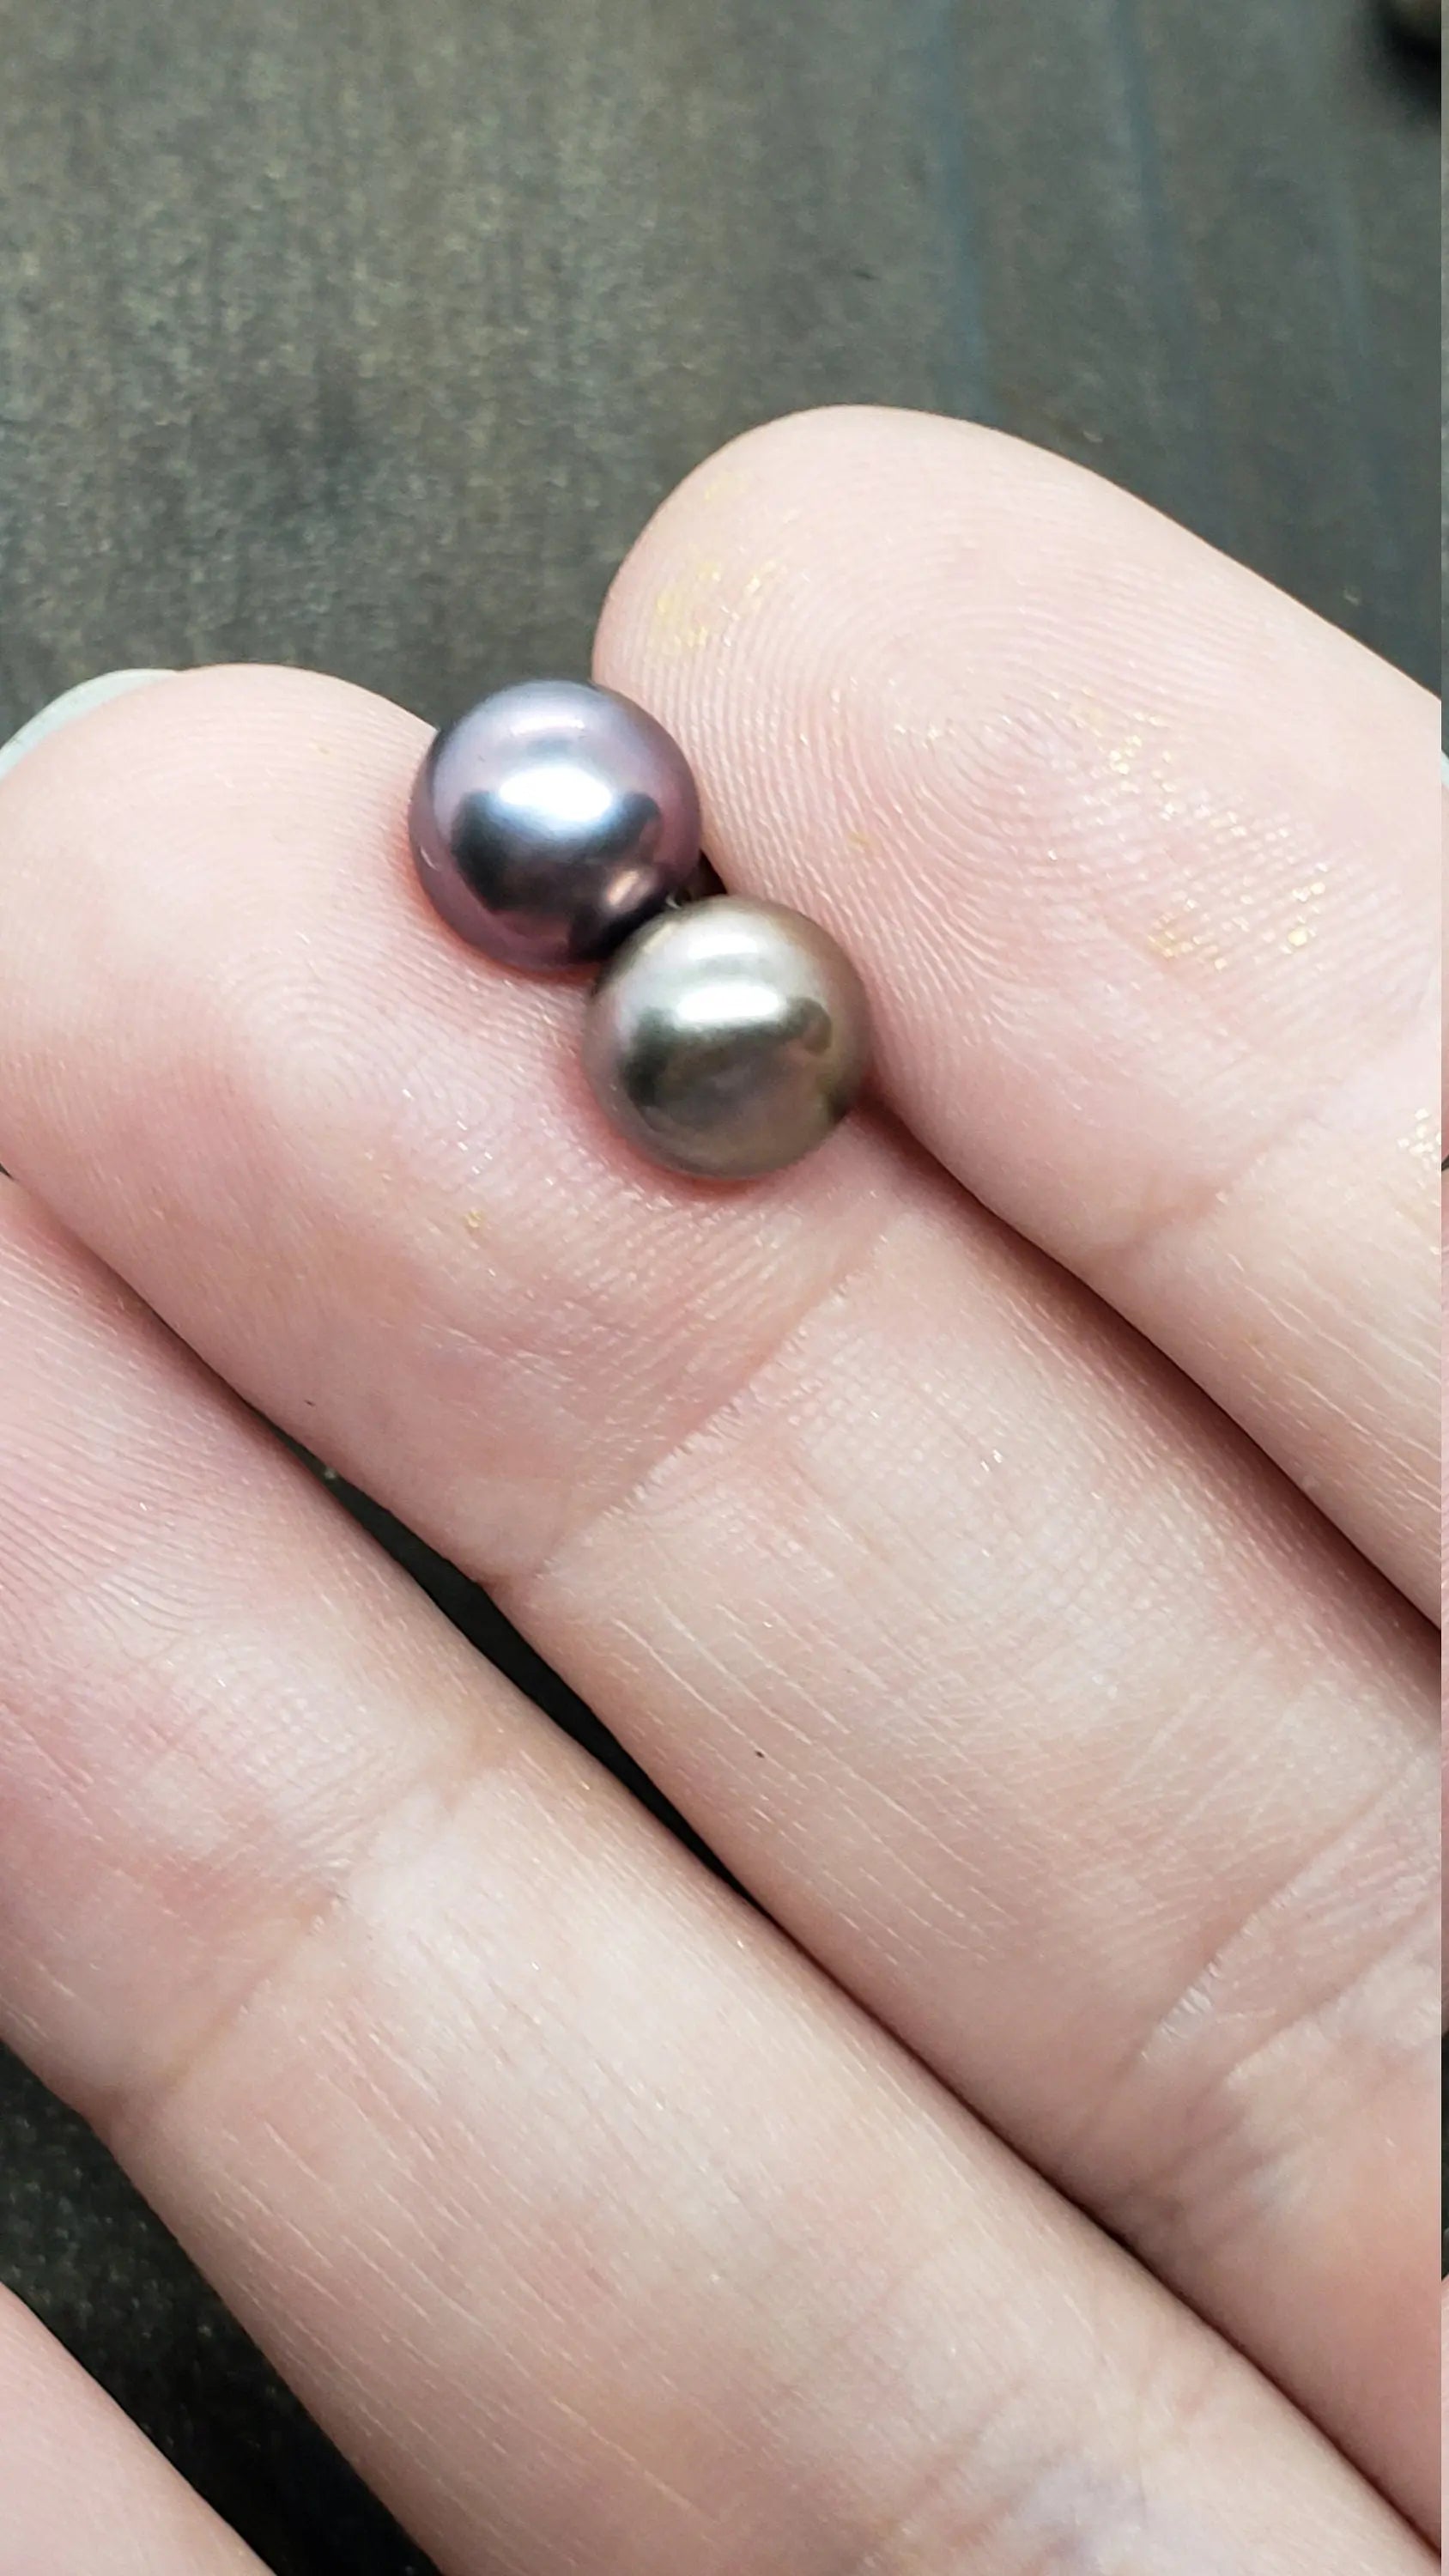 Iridescent Gray Pearl Stud    gemstone earring, gray, pearl